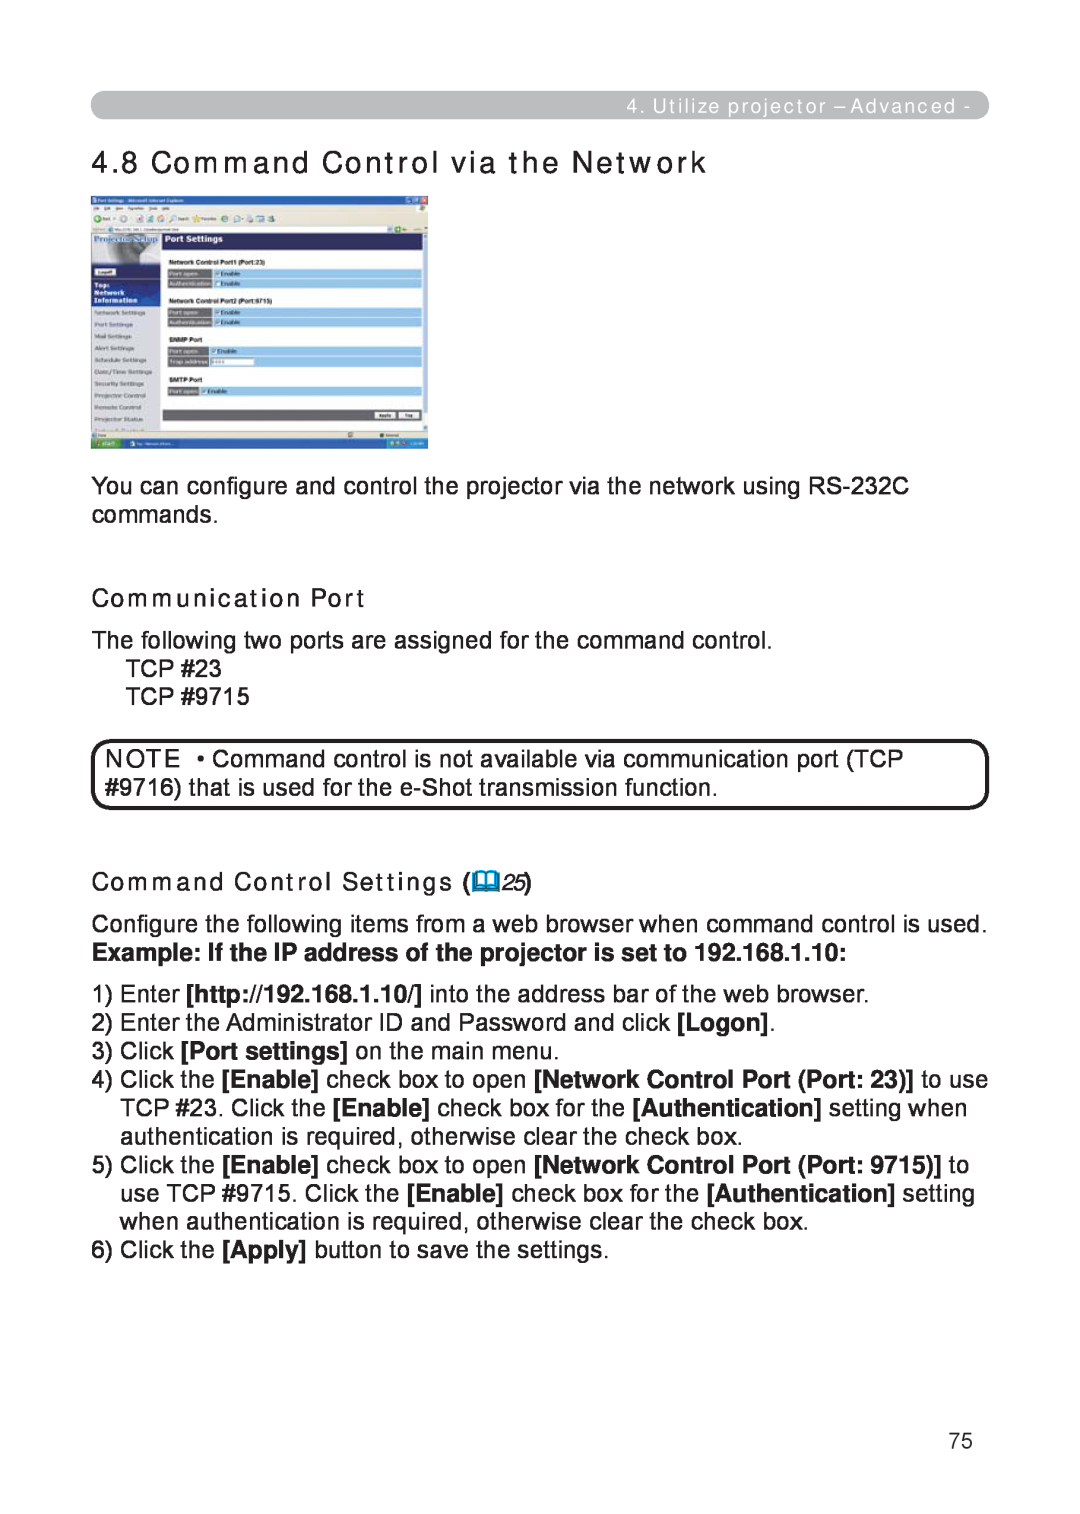 3M X62w manual Command Control via the Network, Communication Port, Command Control Settings 